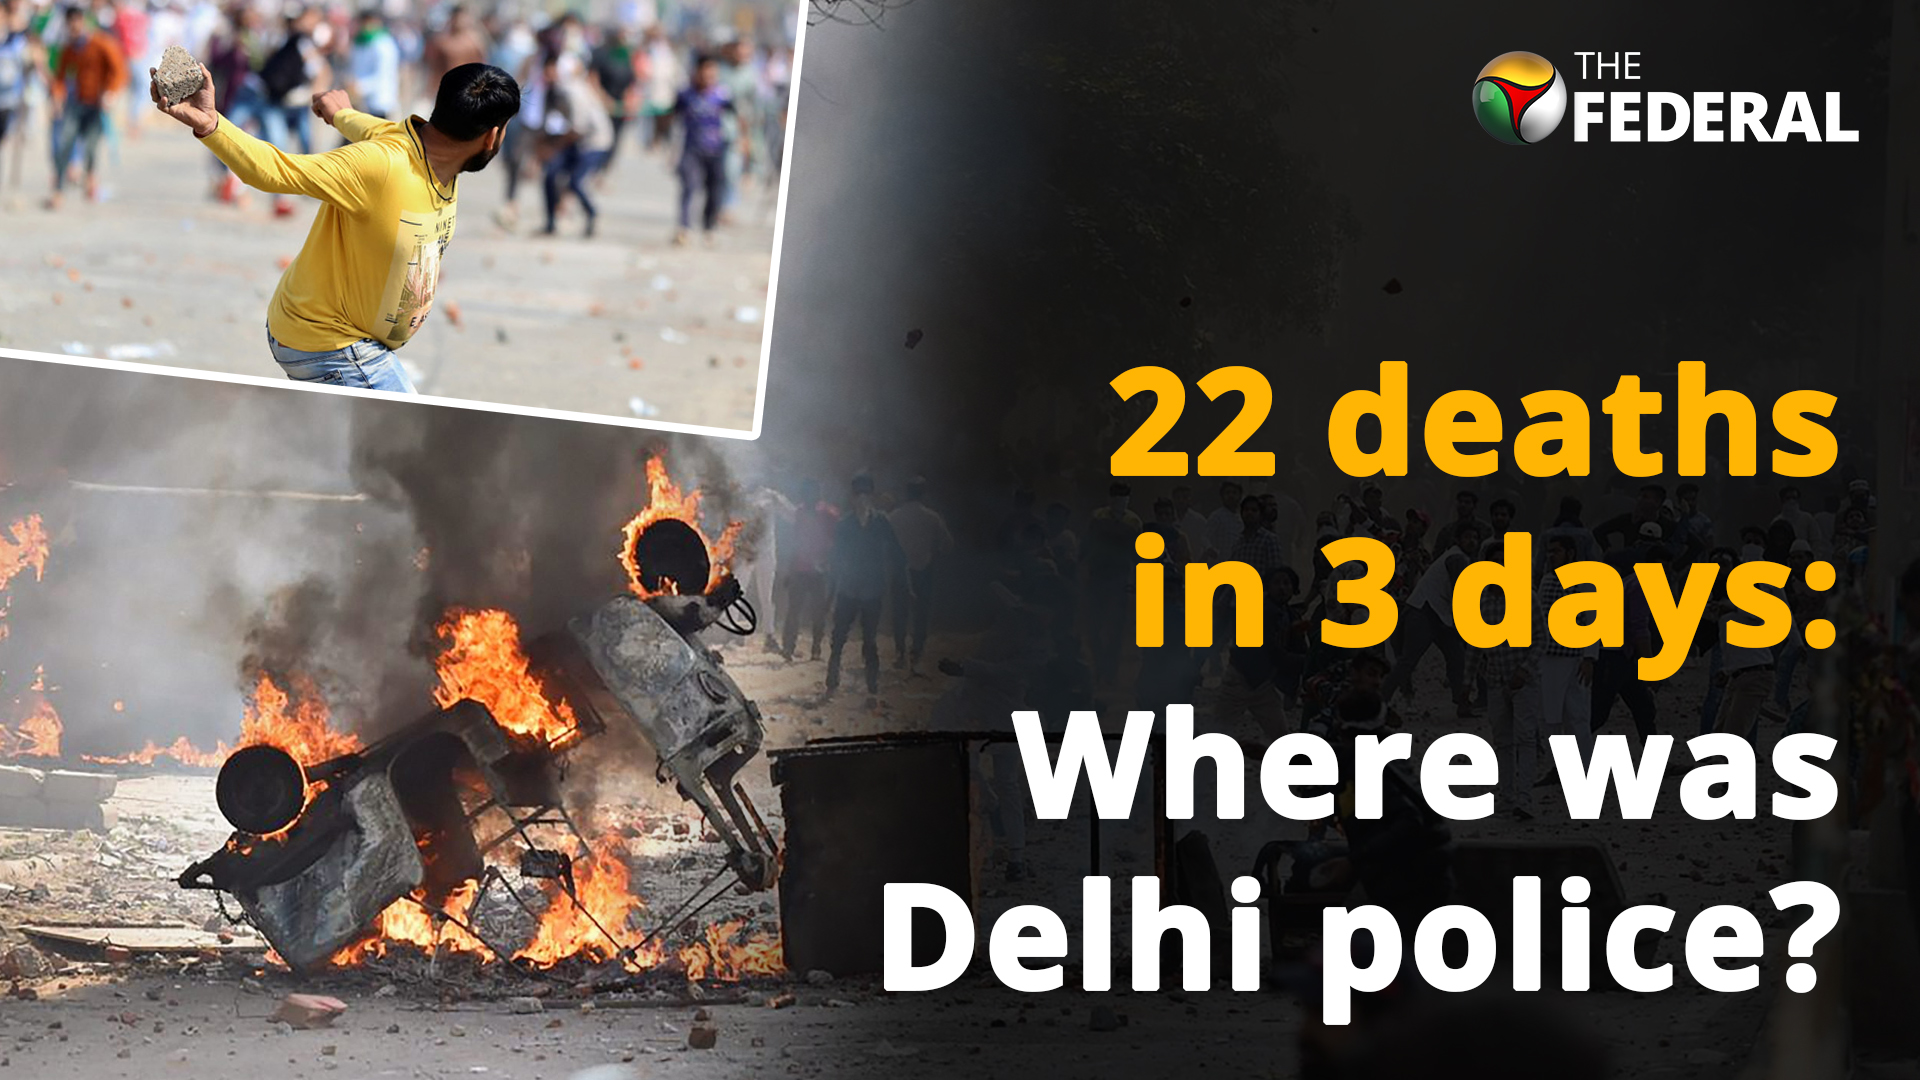 22 deaths in 3 days: Delhi police, where were you?